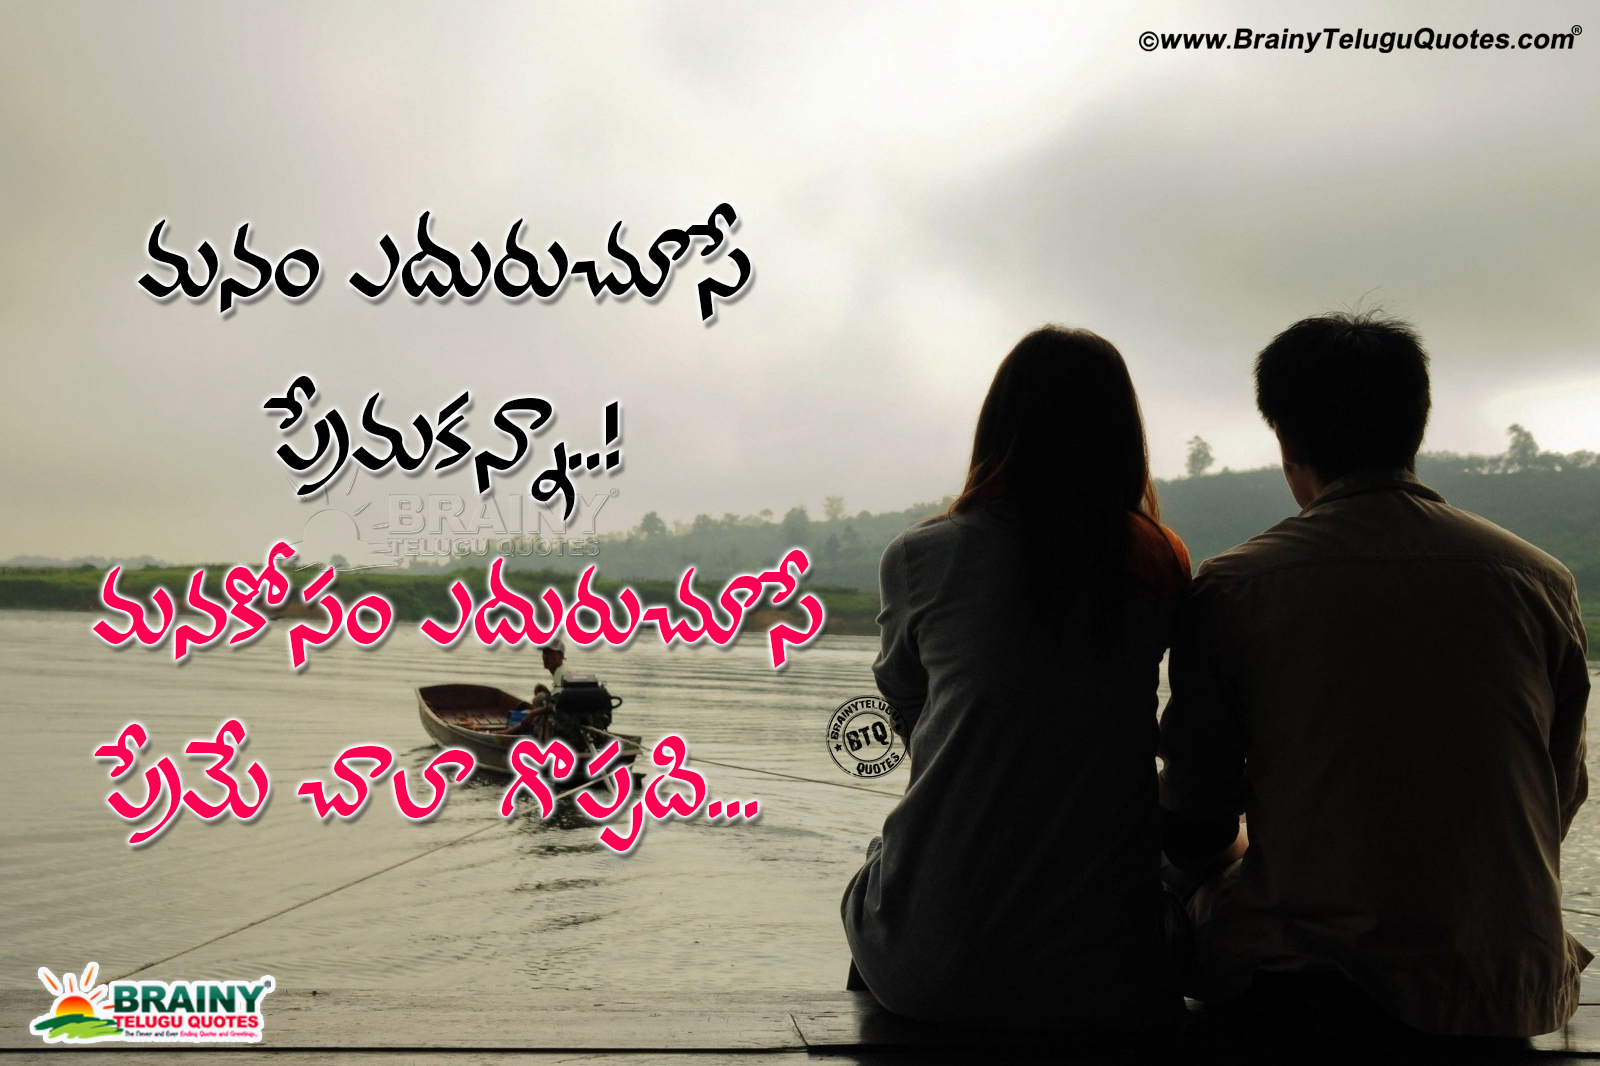 Heart Touching love Messages in Telugu-Telugu Best Romantic Love Poems